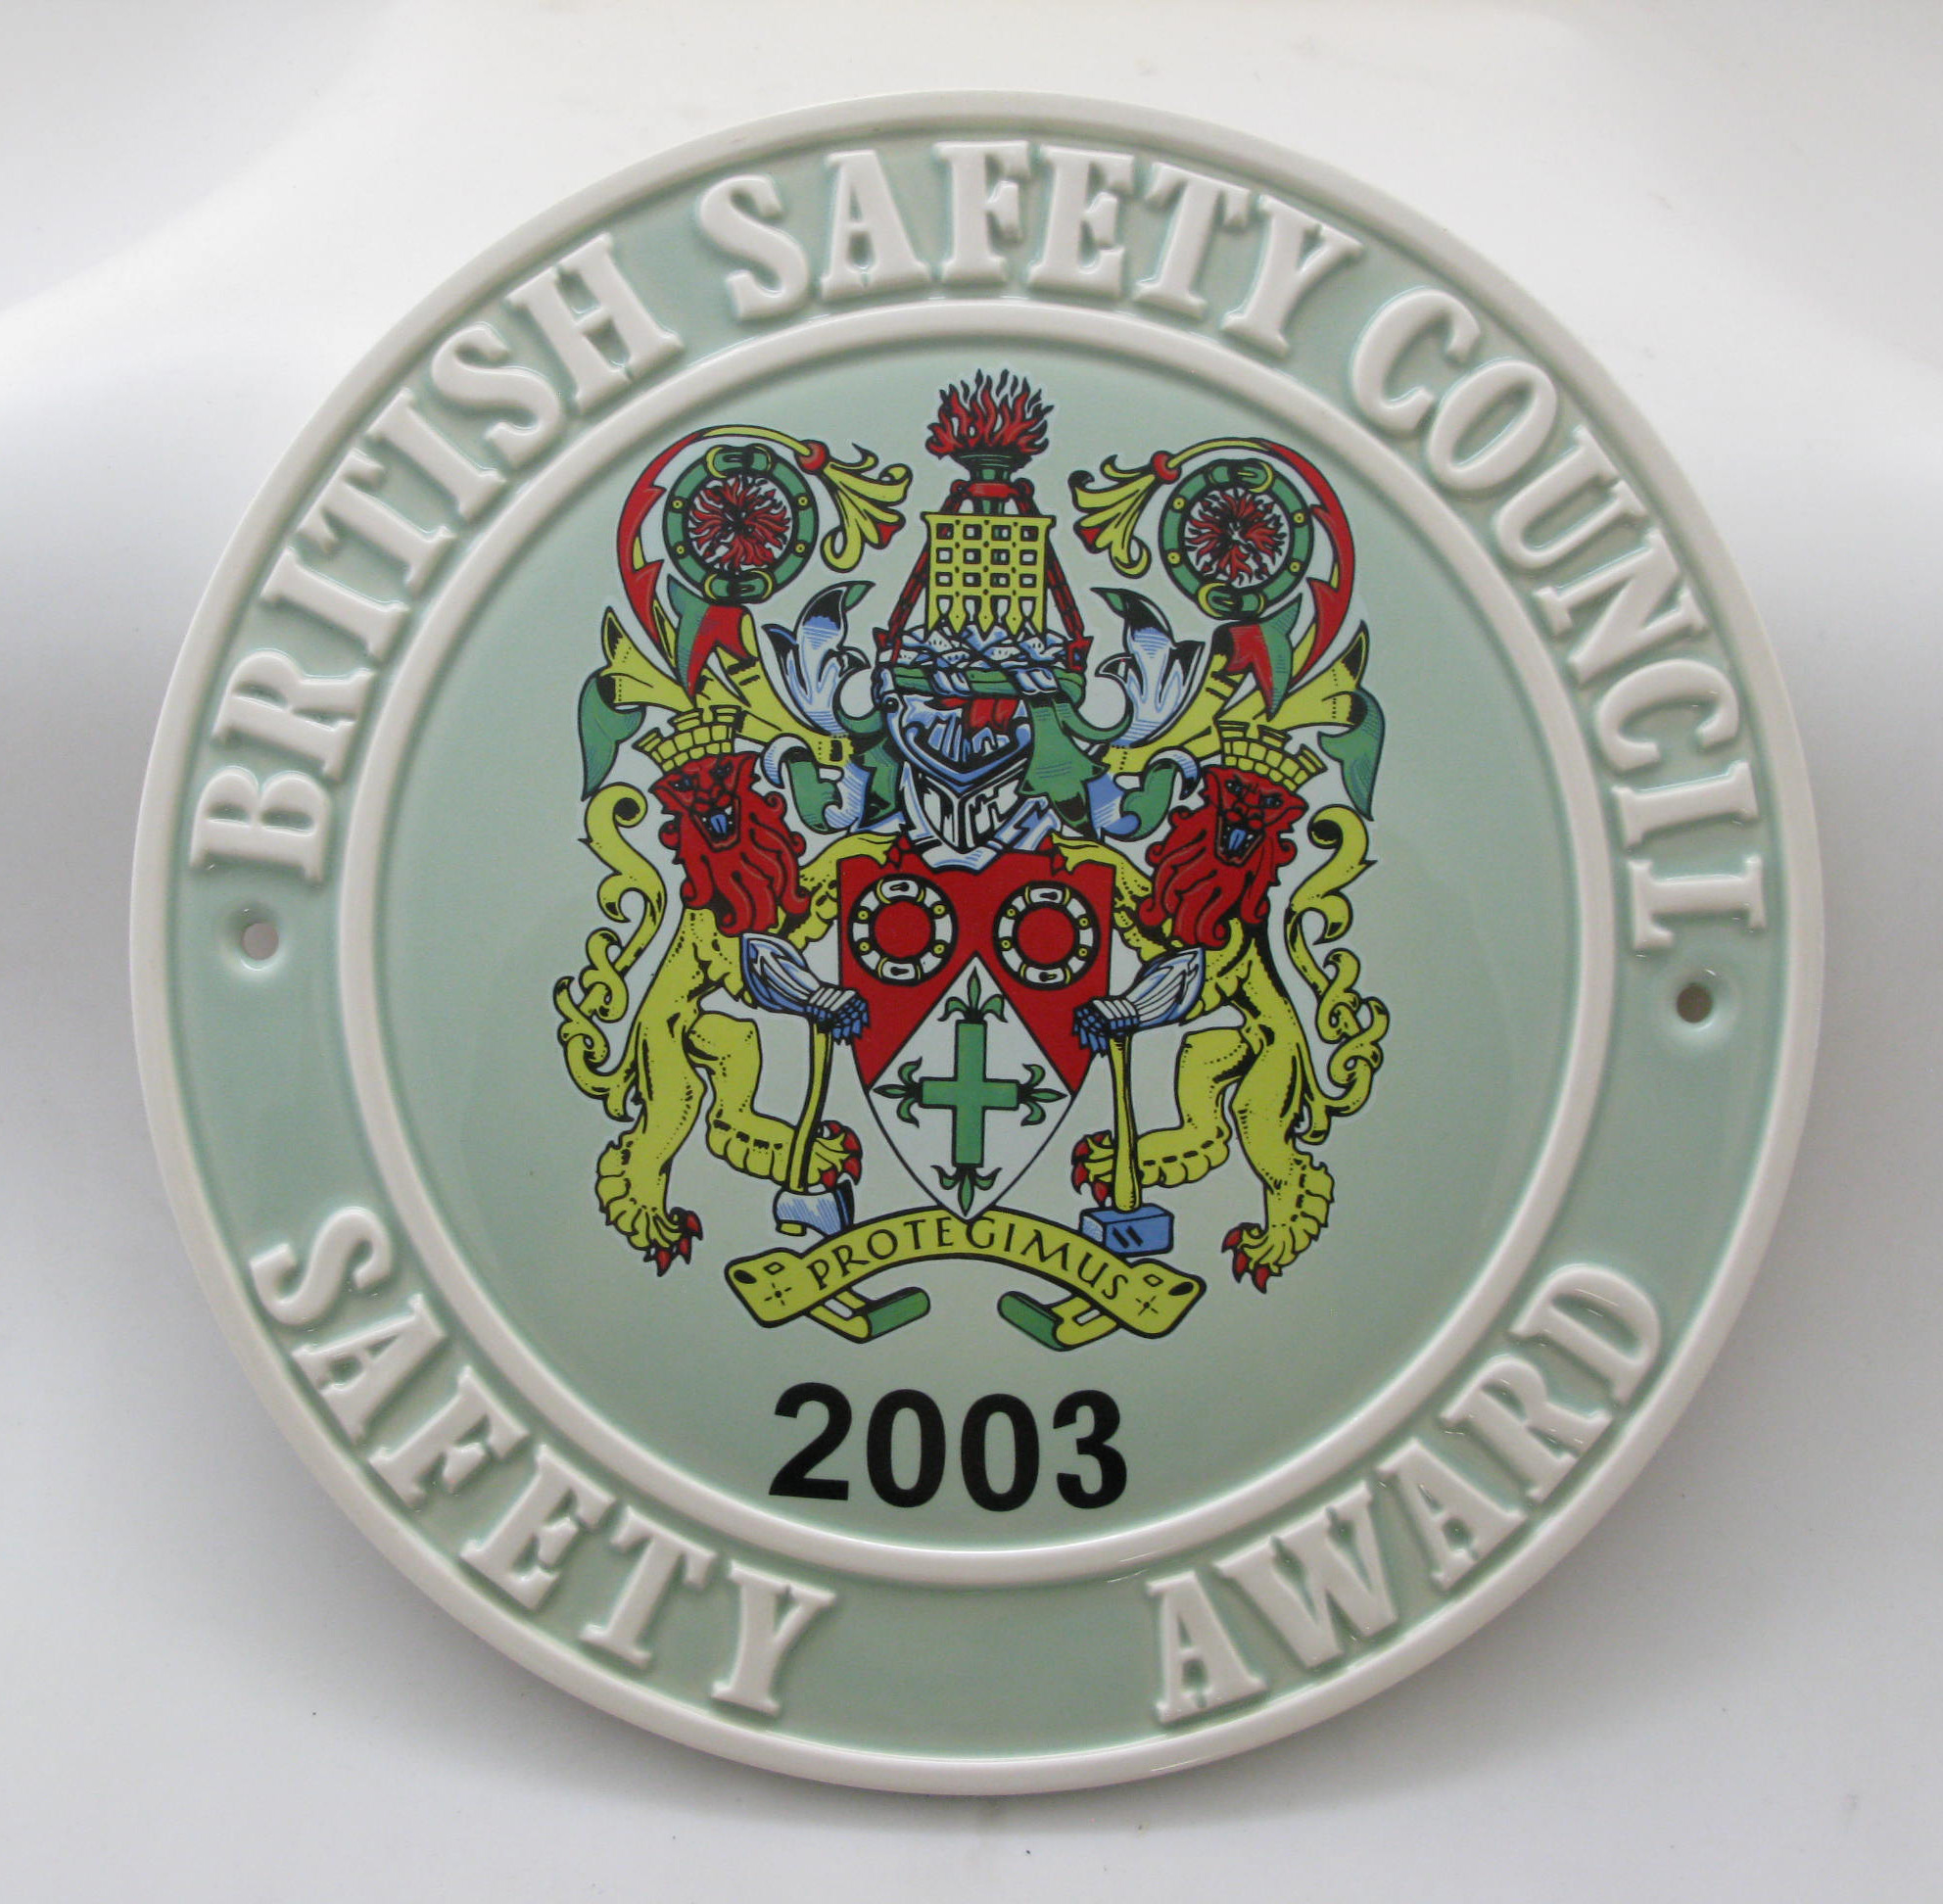 2003 Safety Award Plaque